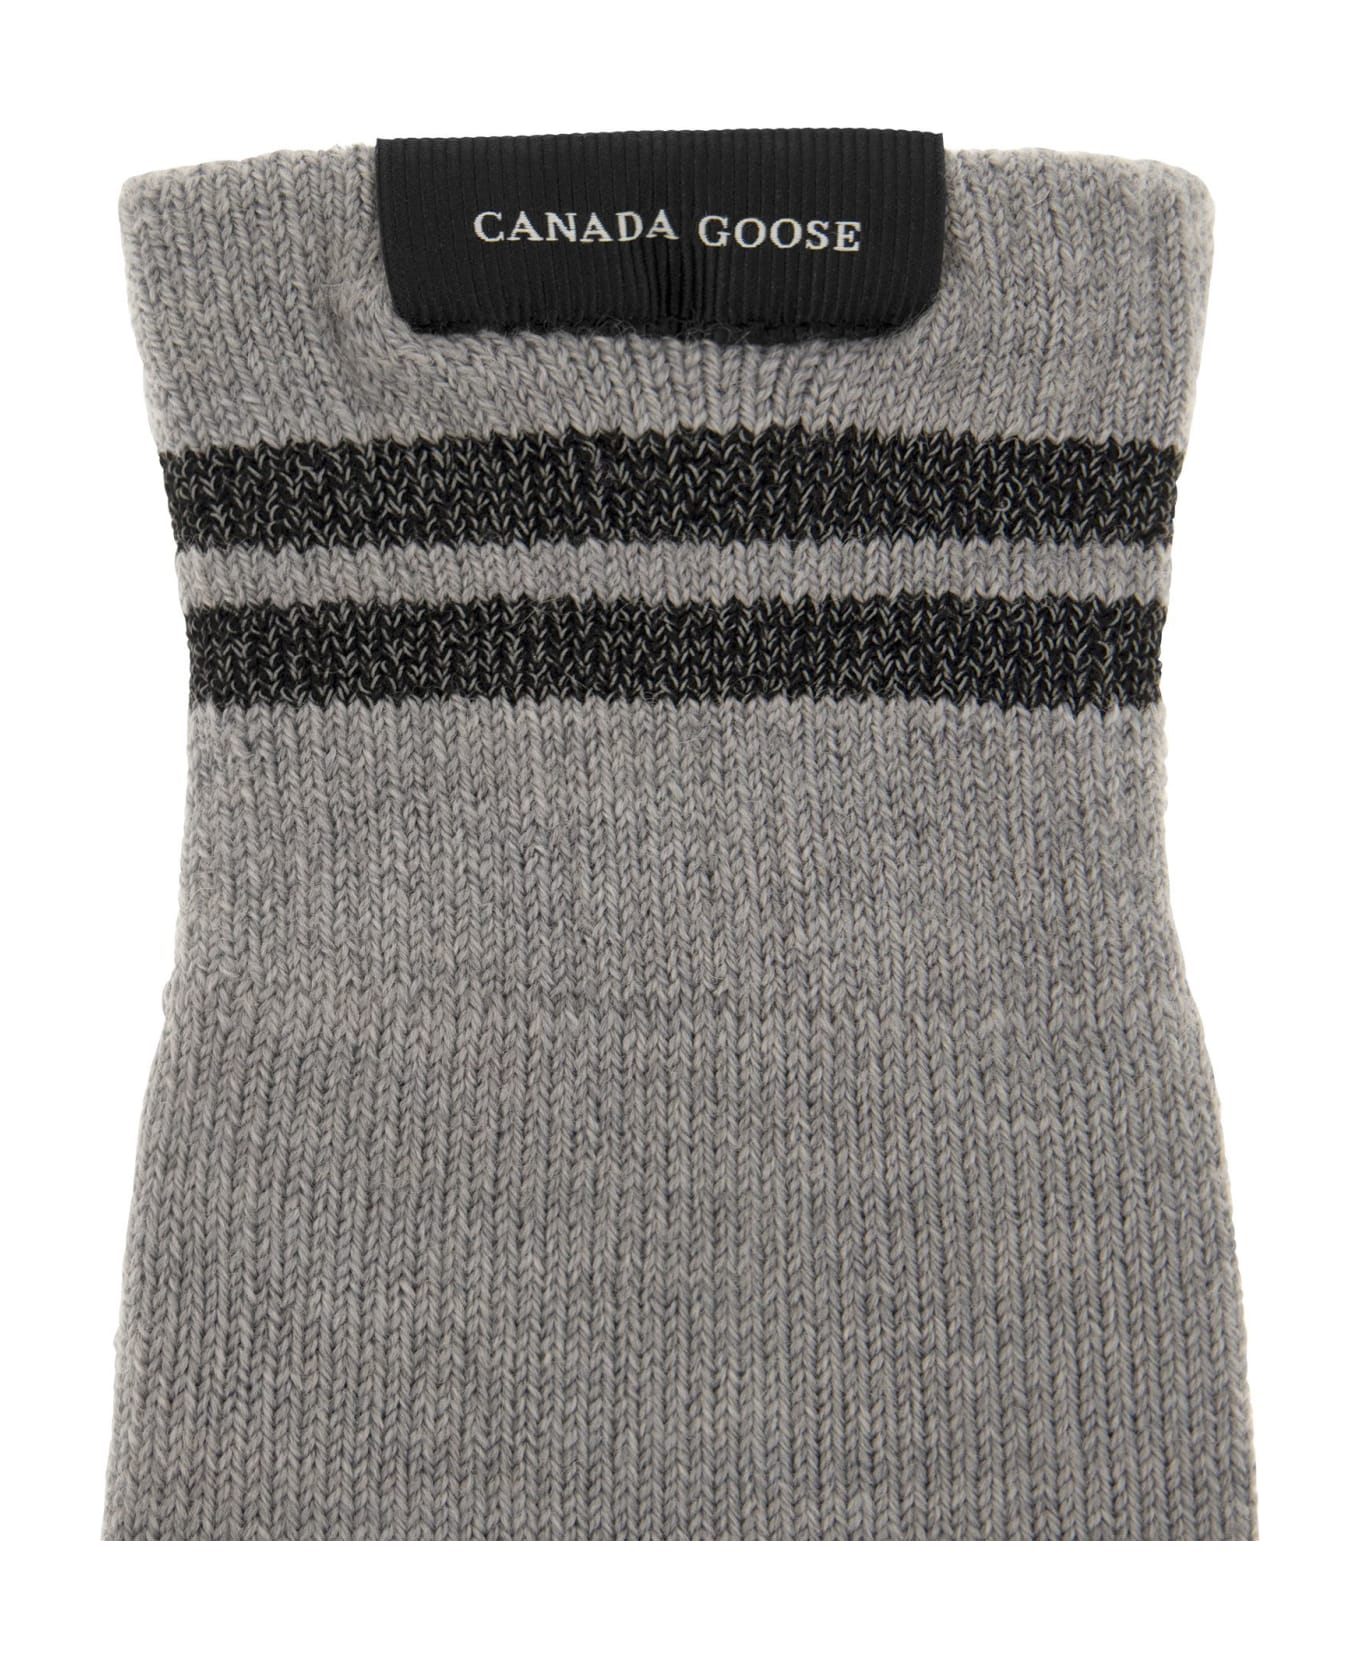 Canada Goose Wool Barrier Glove - Grey